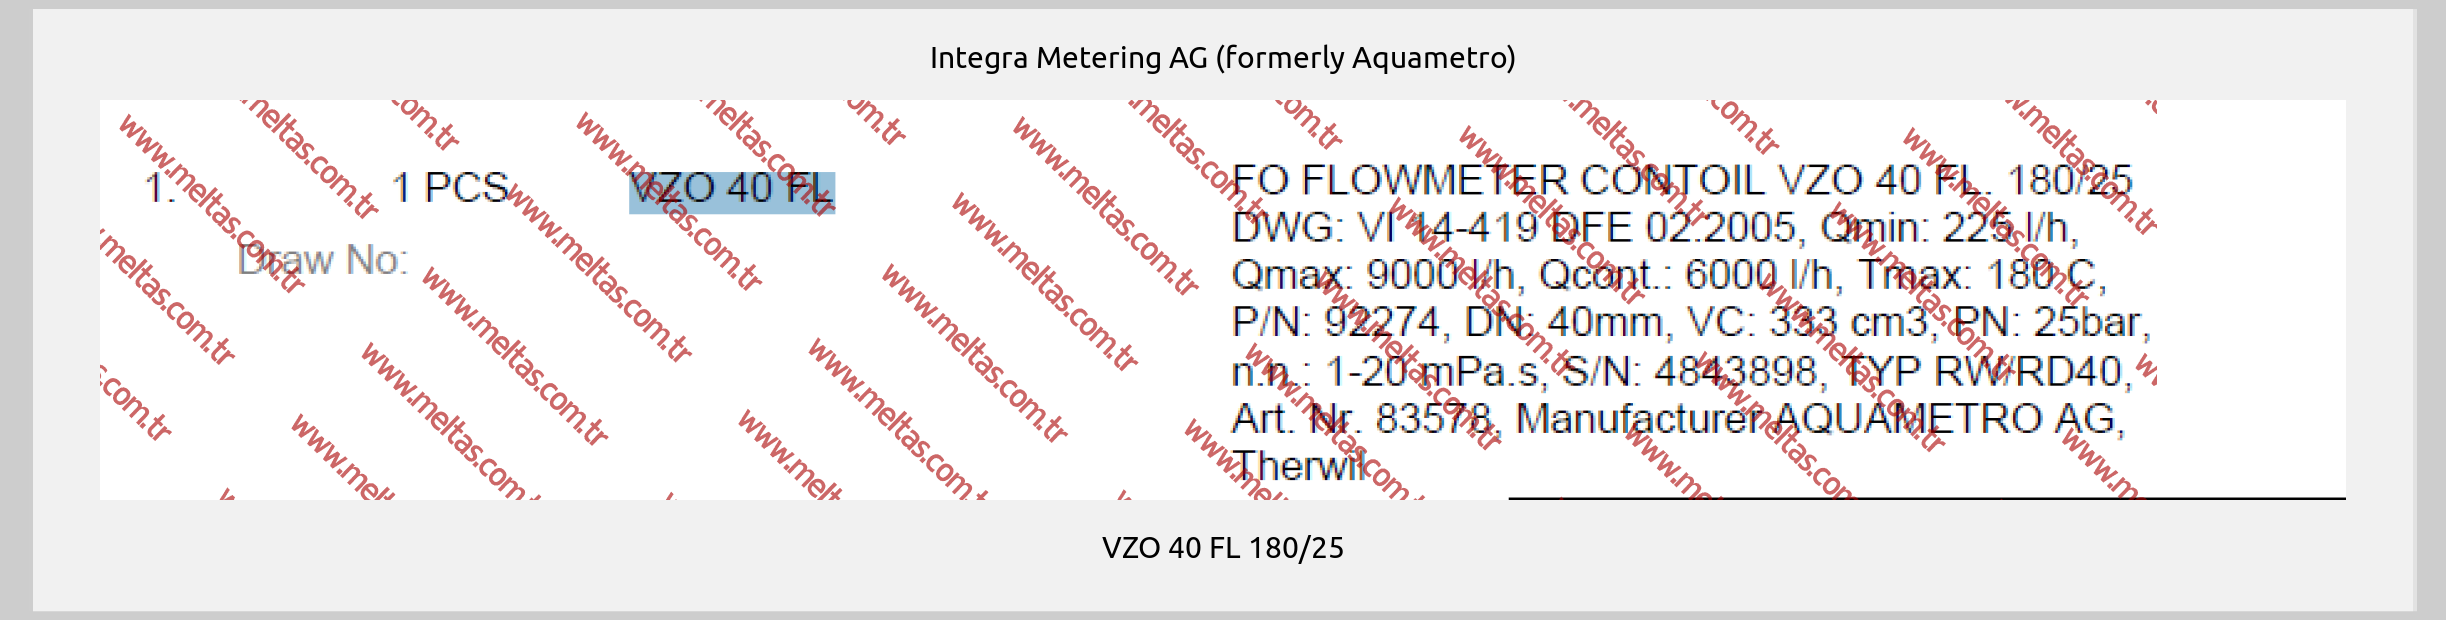 Integra Metering AG (formerly Aquametro)-VZO 40 FL 180/25